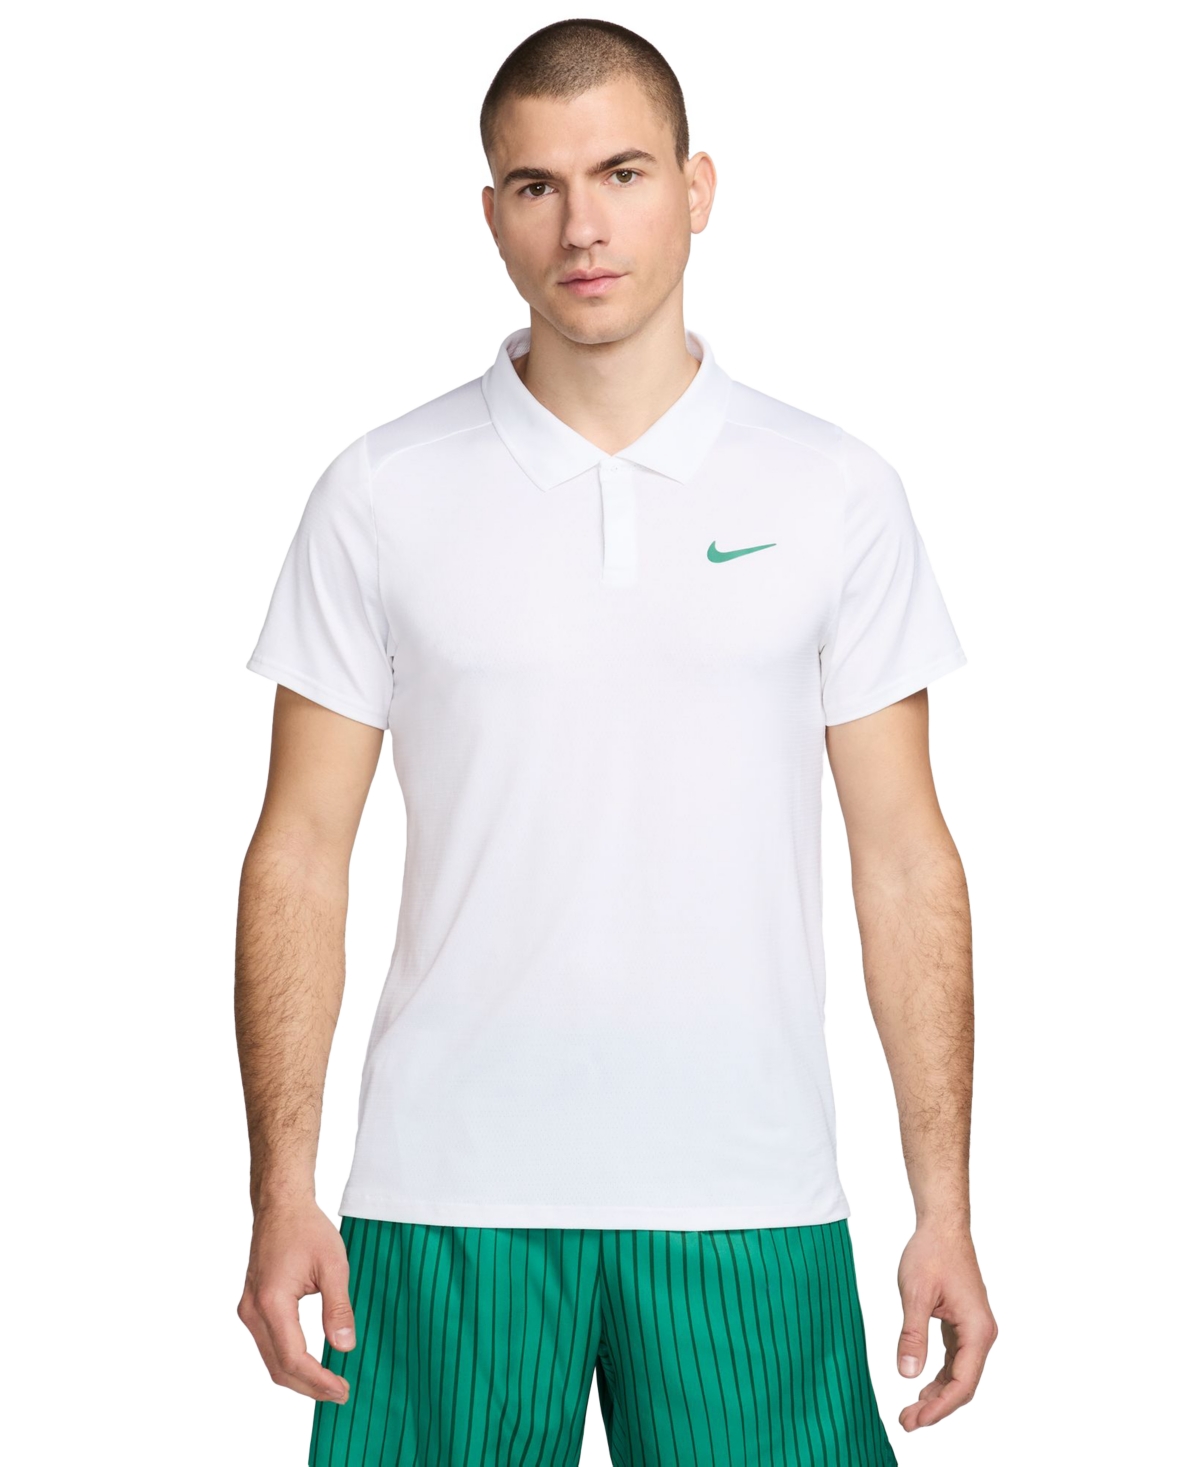 NikeCourt Men's Advantage Dri-fit Colorblocked Tennis Polo Shirt - Bicoastal/black/white